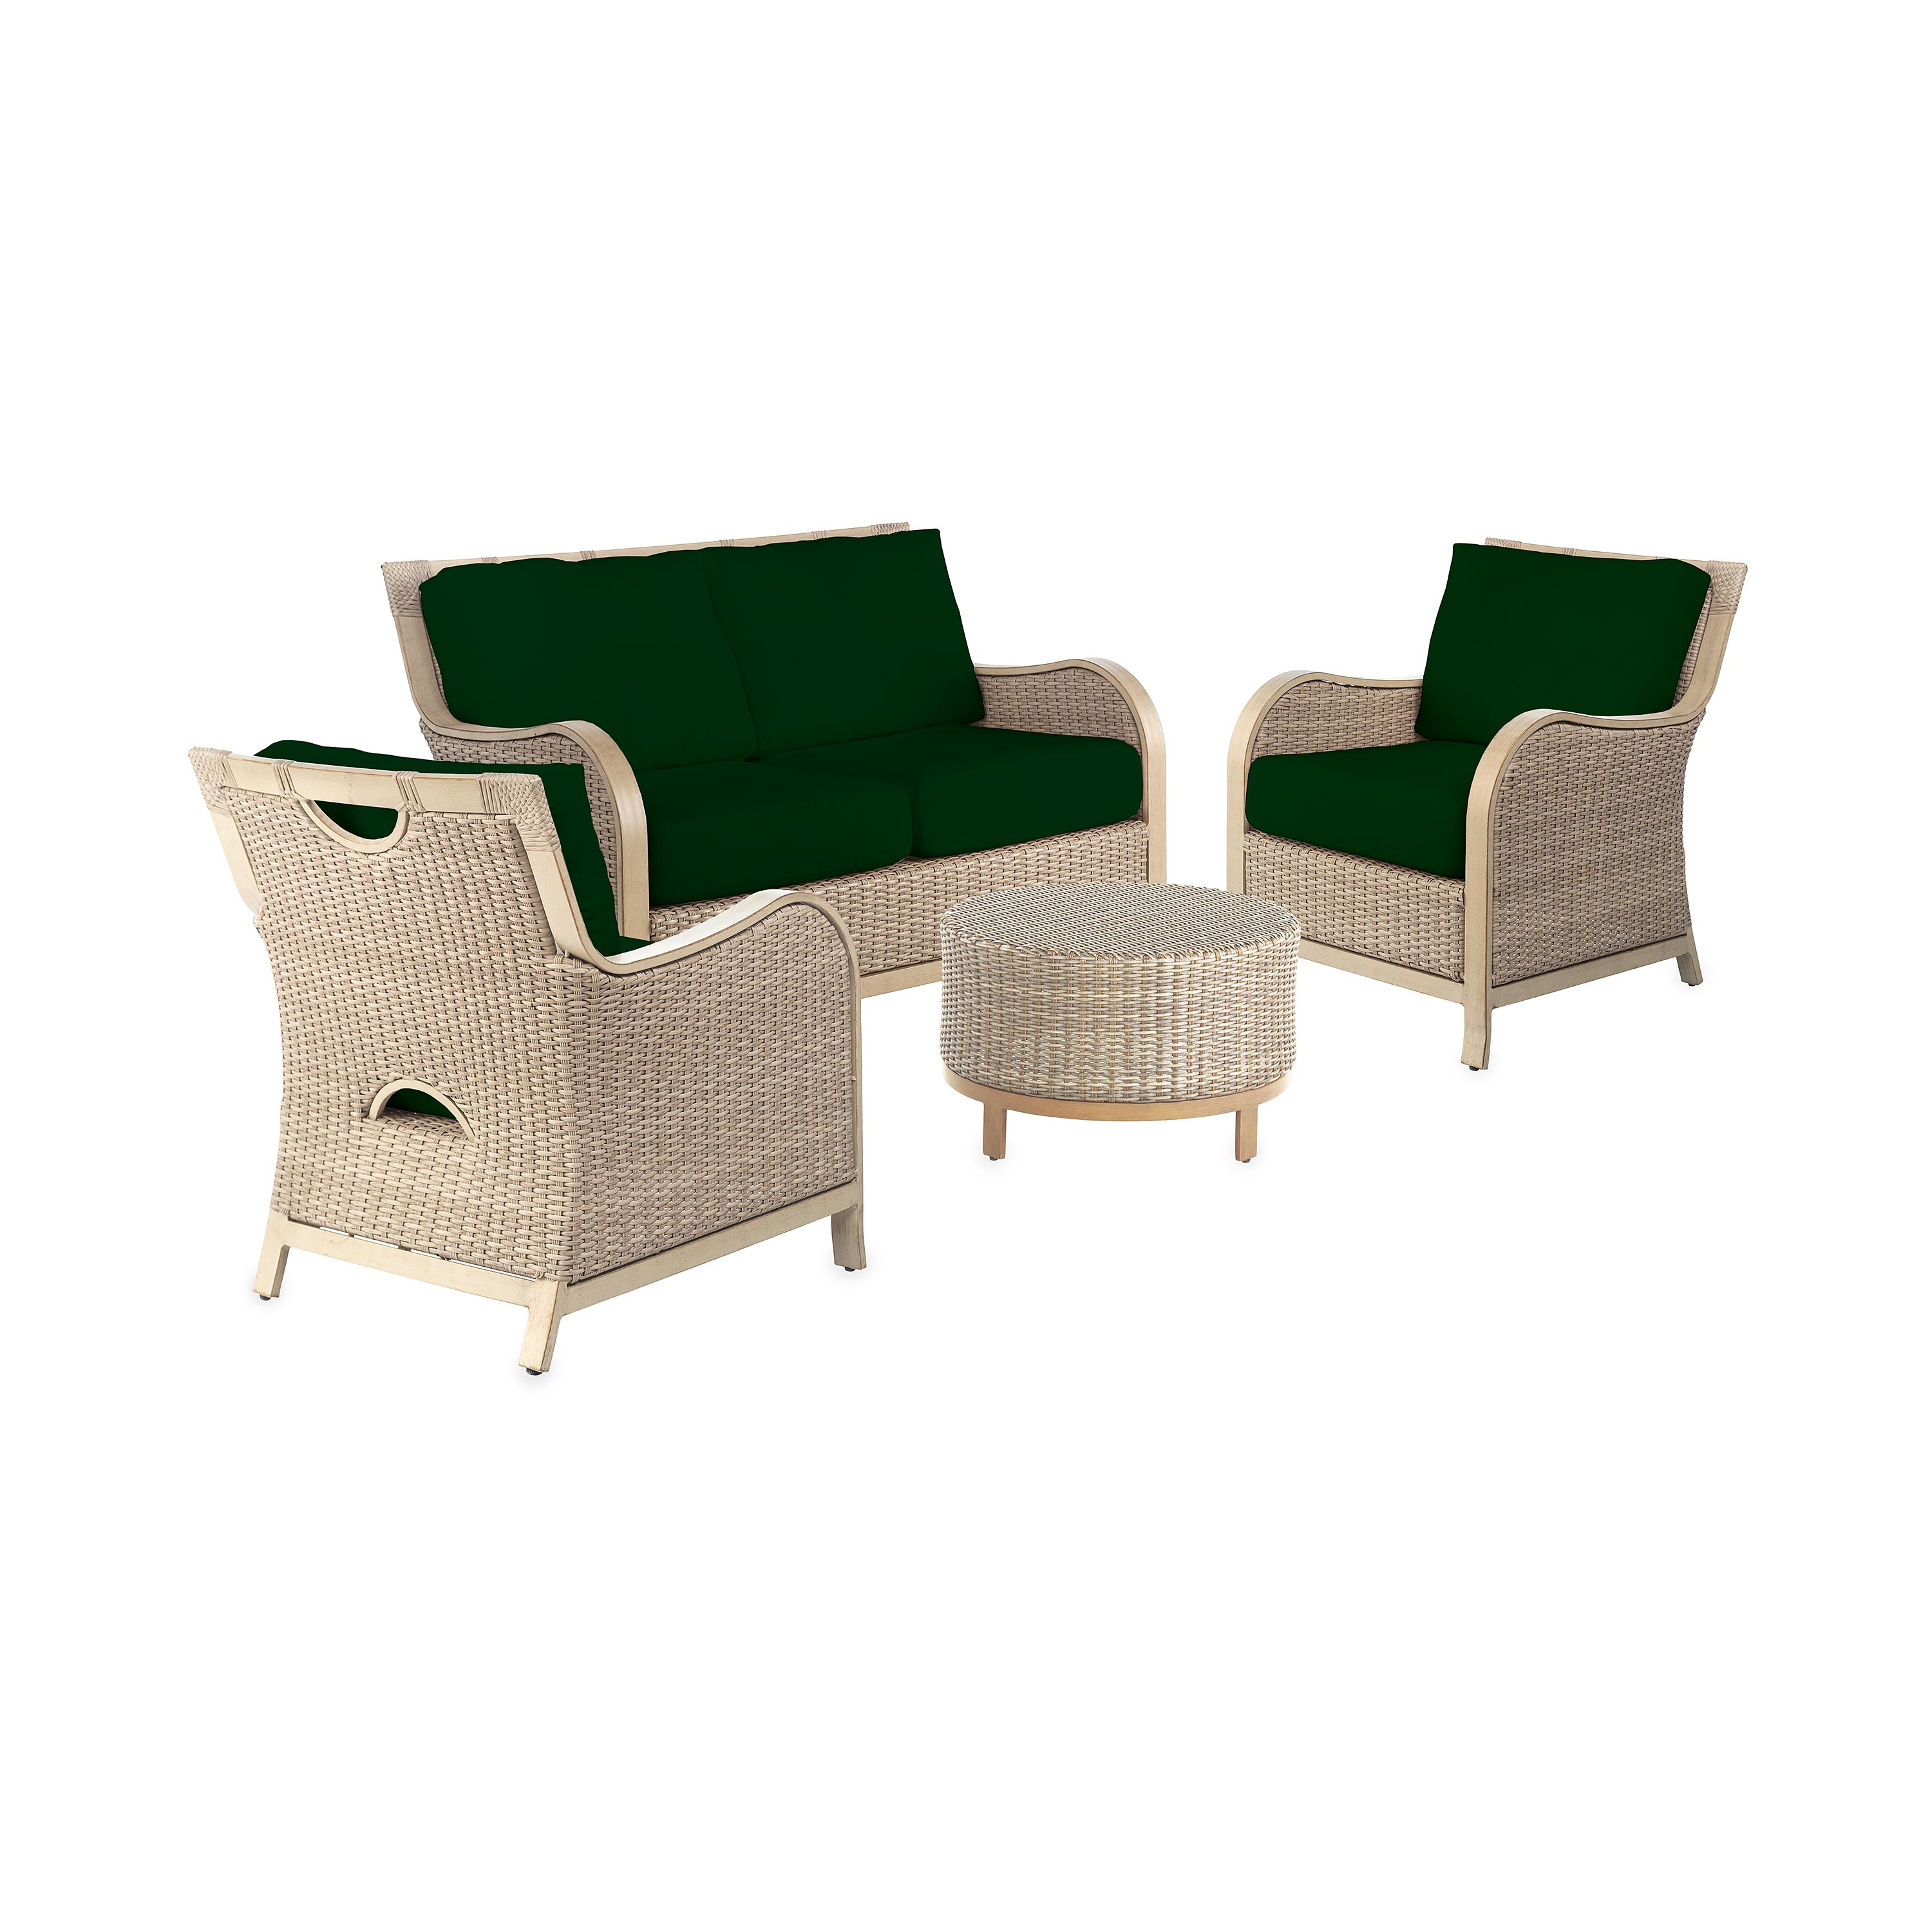 Urbanna Driftwood Premium Wicker Four Piece Set with Cushions swatch image